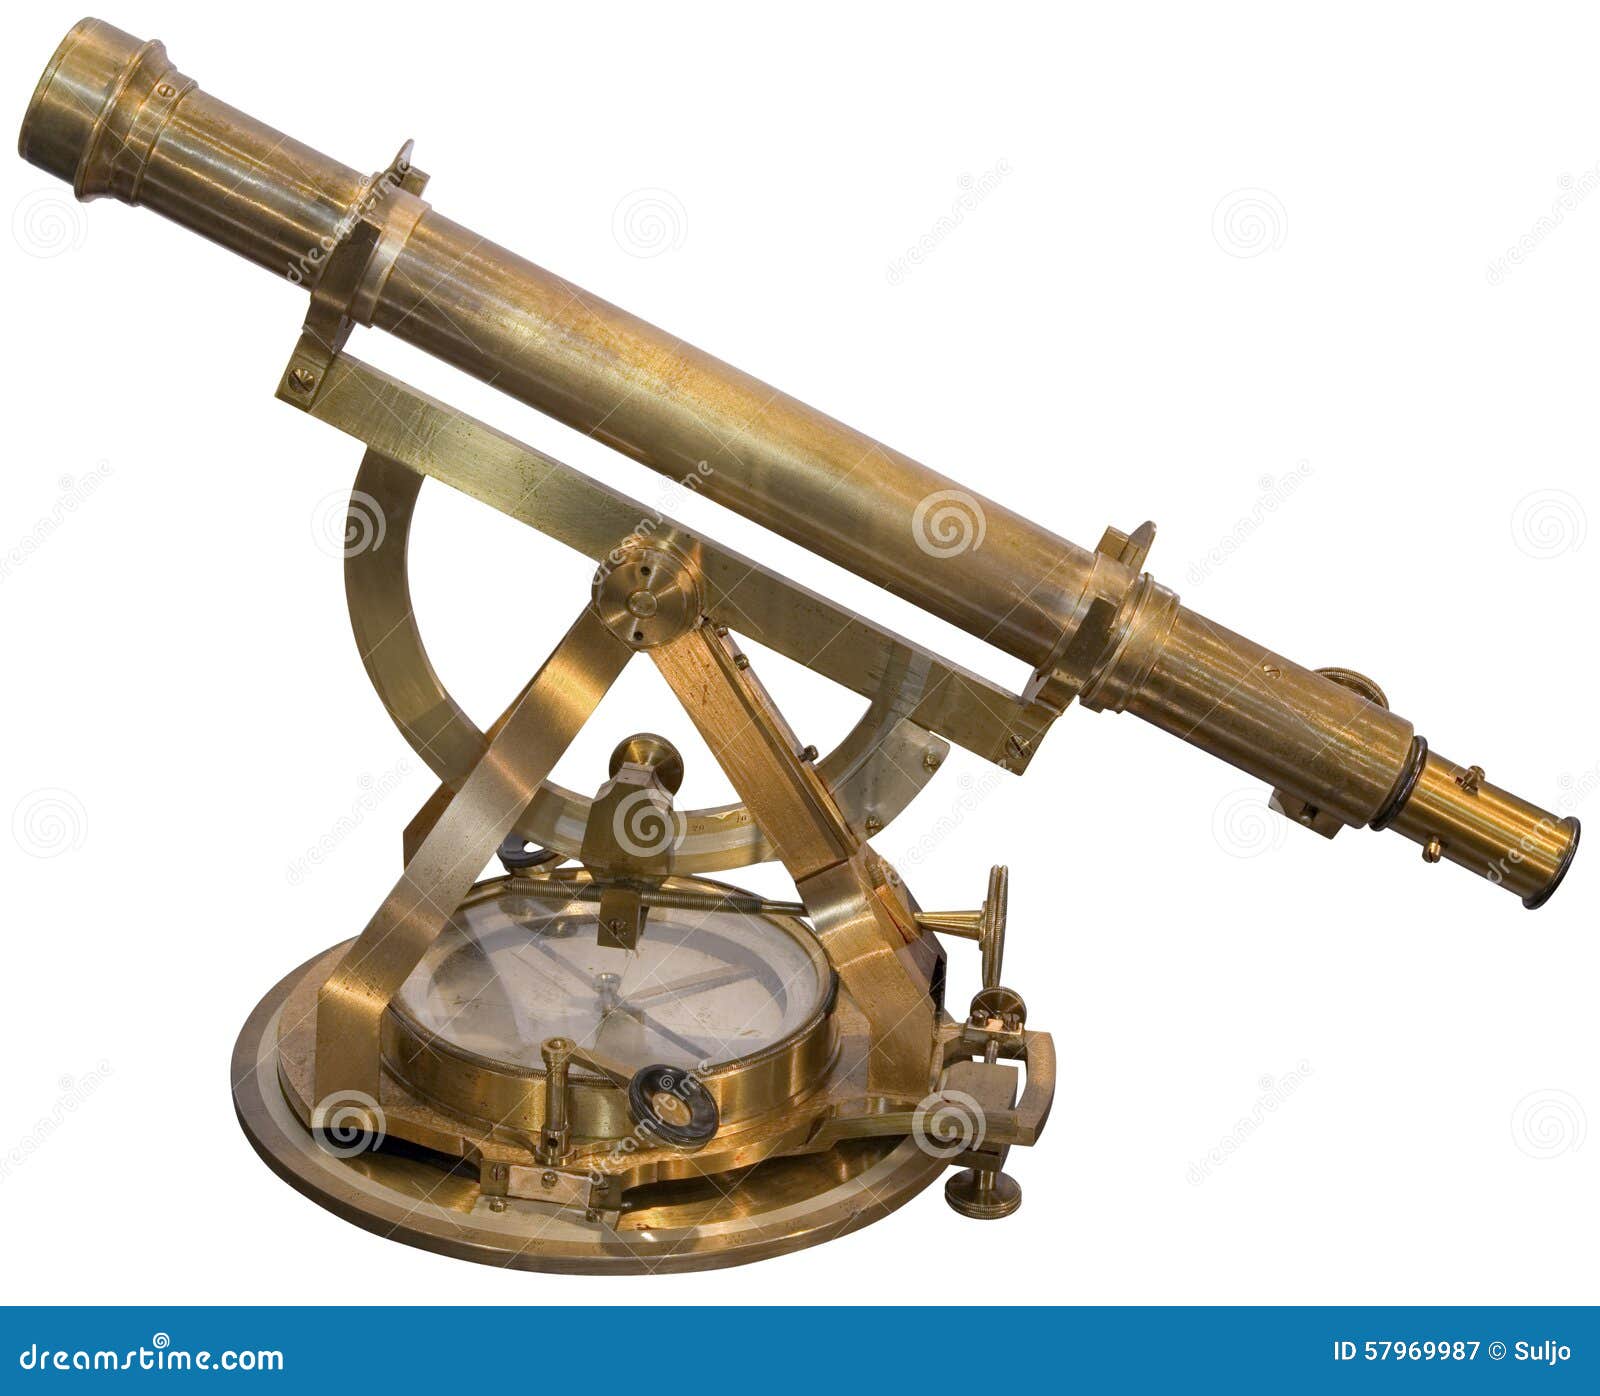 Old Measuring Instrument for Navigation Stock Image - Image of